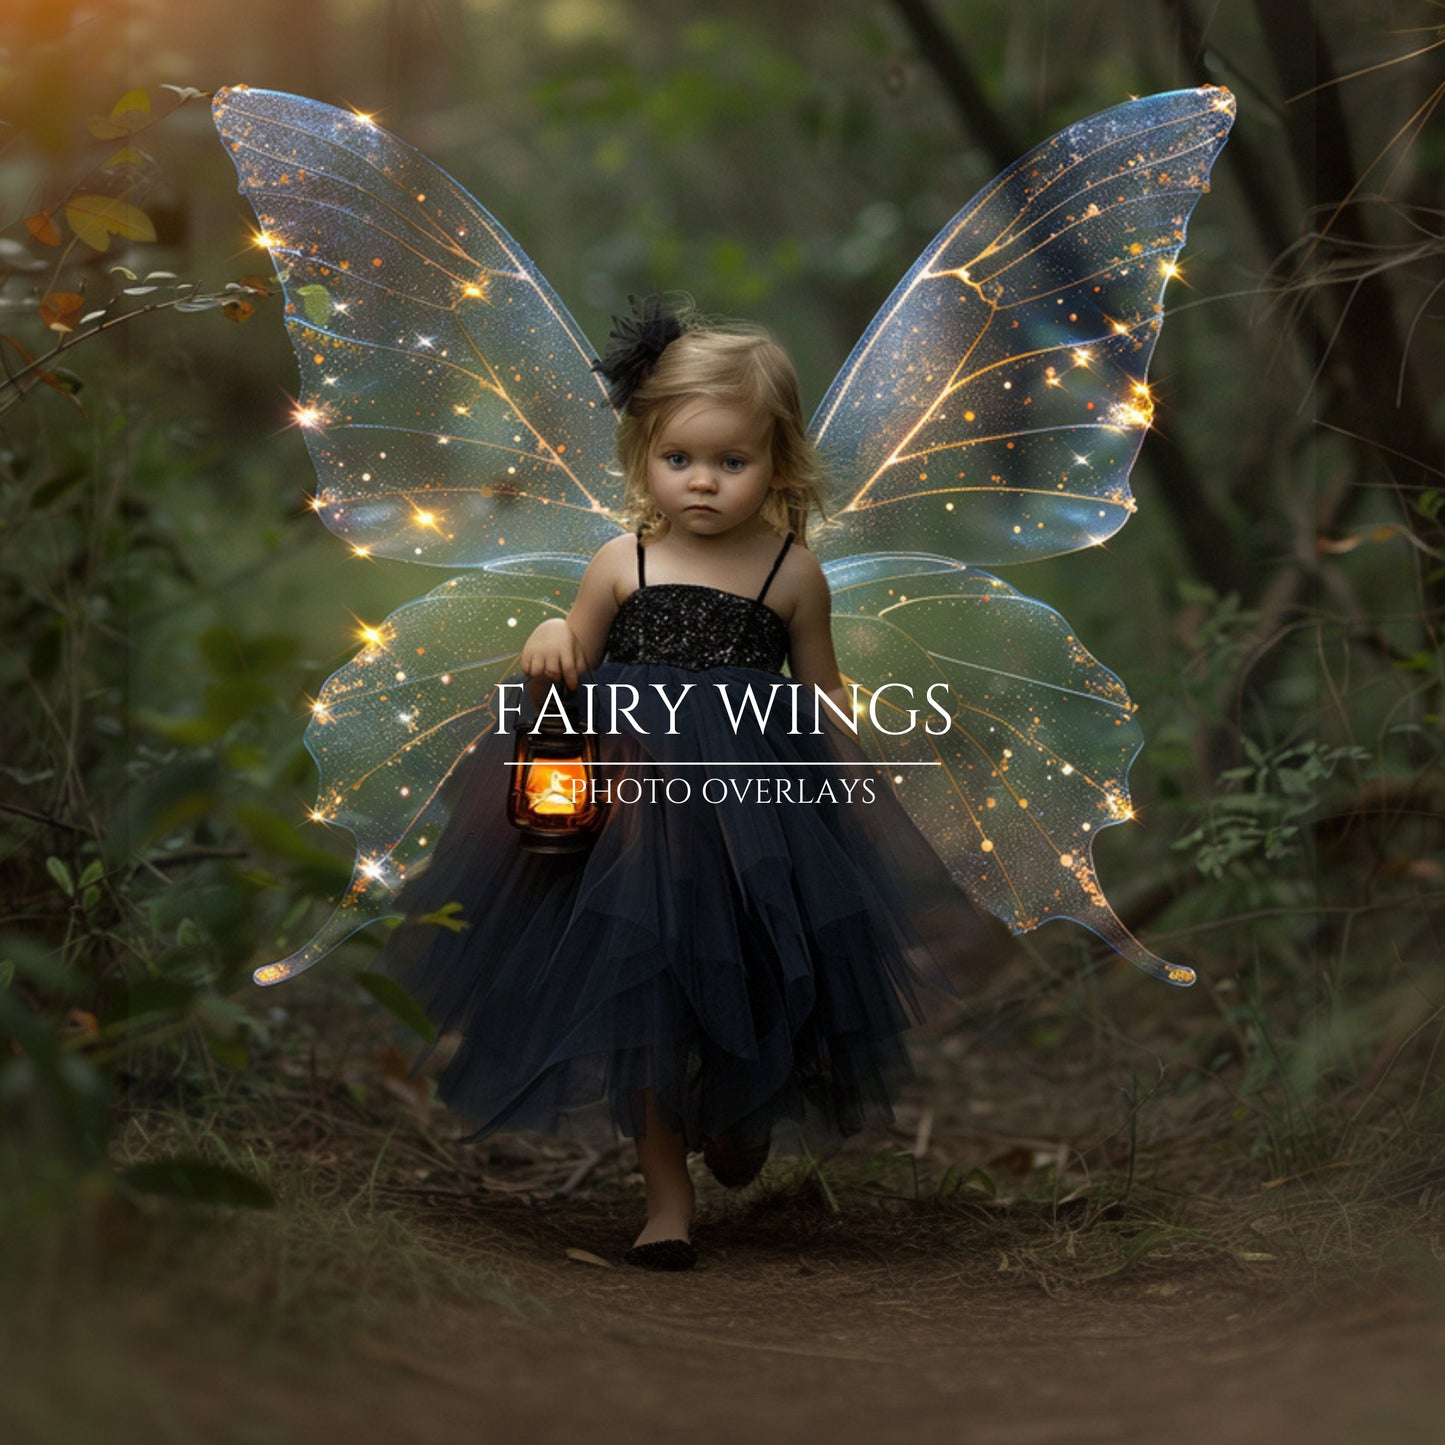 Fairy Wings Photo Overlays